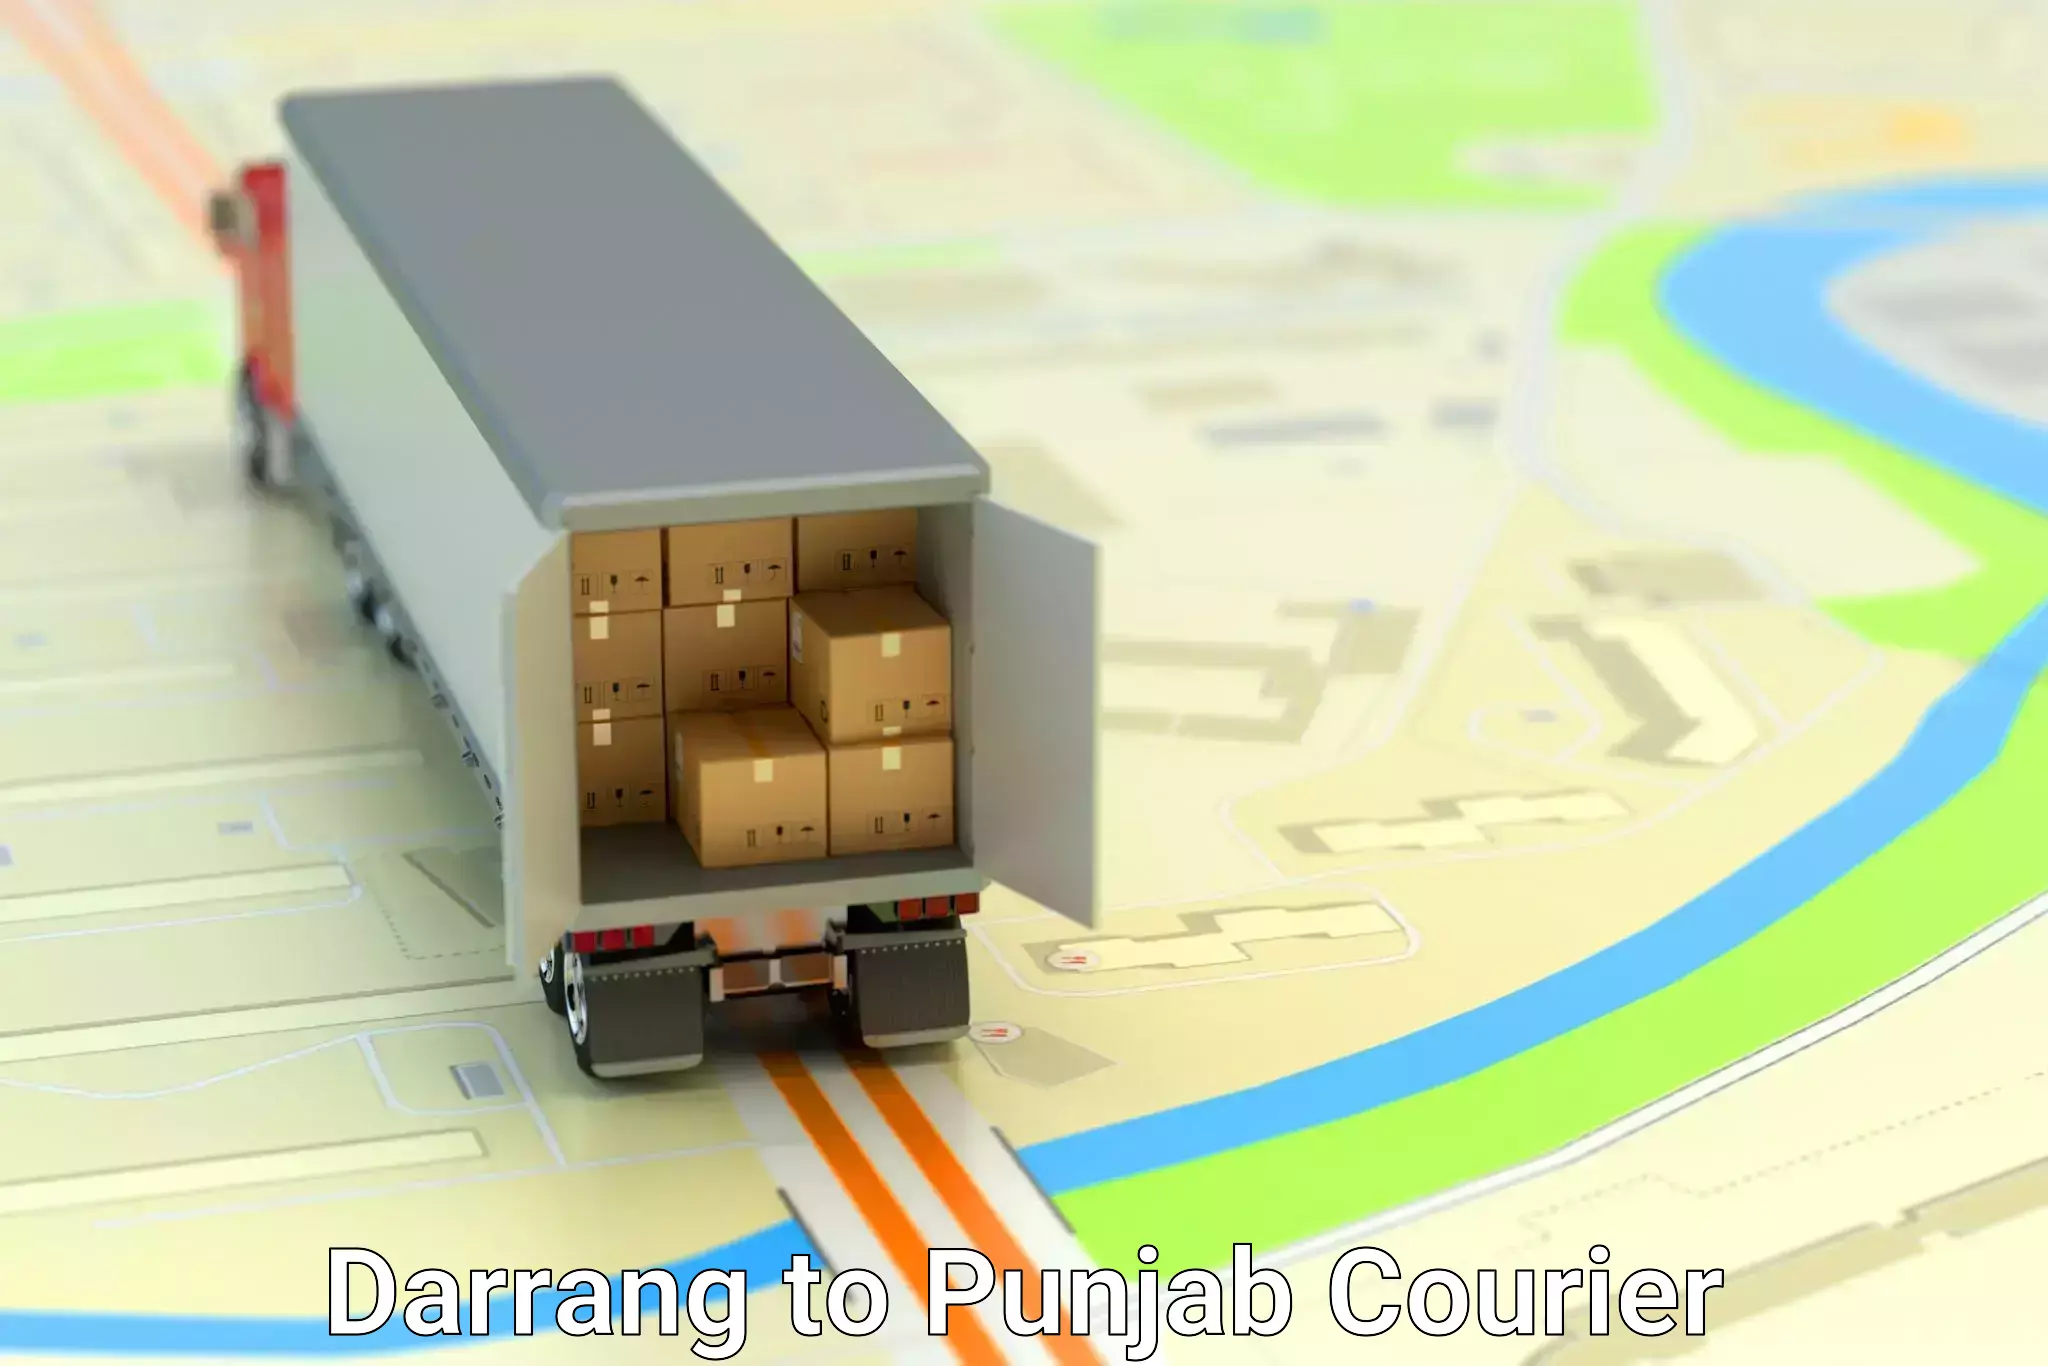 On-demand delivery Darrang to Dinanagar